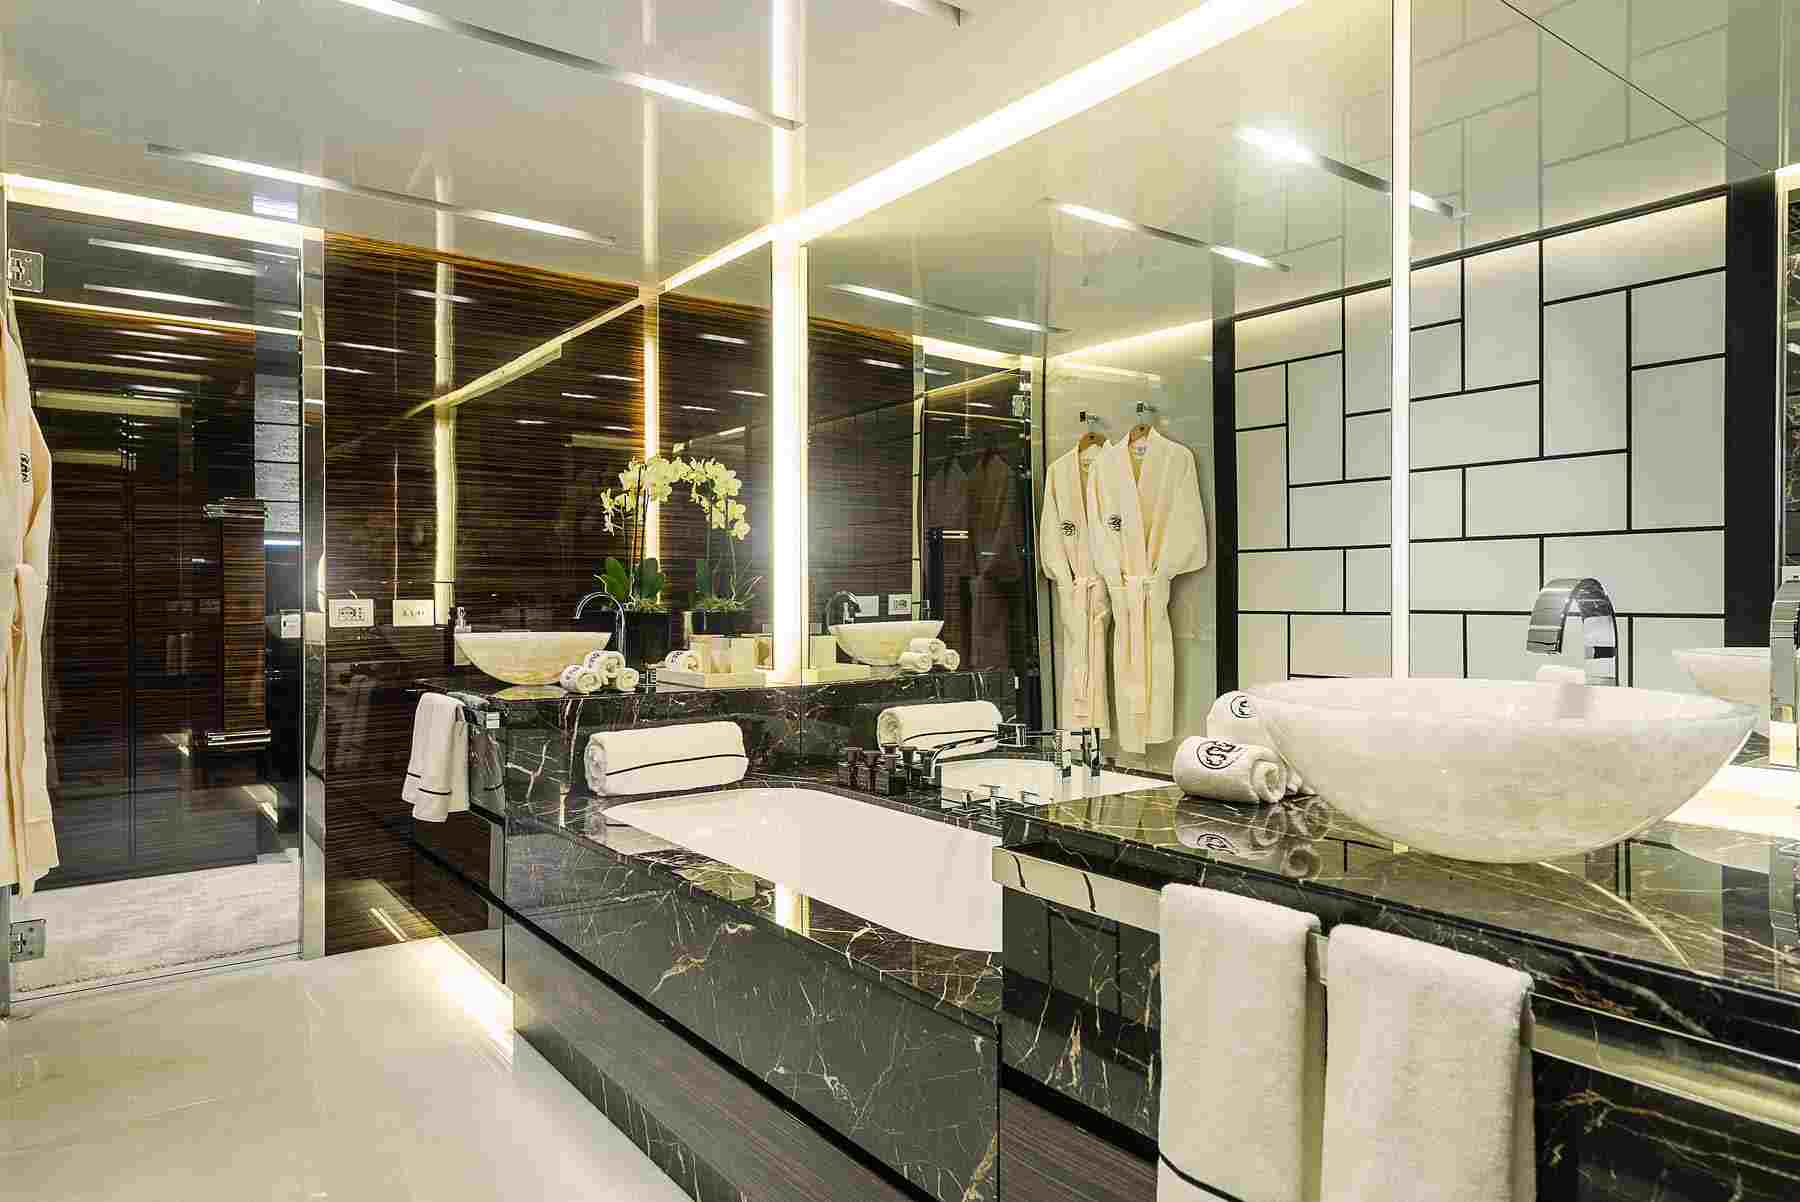 marmol negro idea baño lujo moderno perfecto